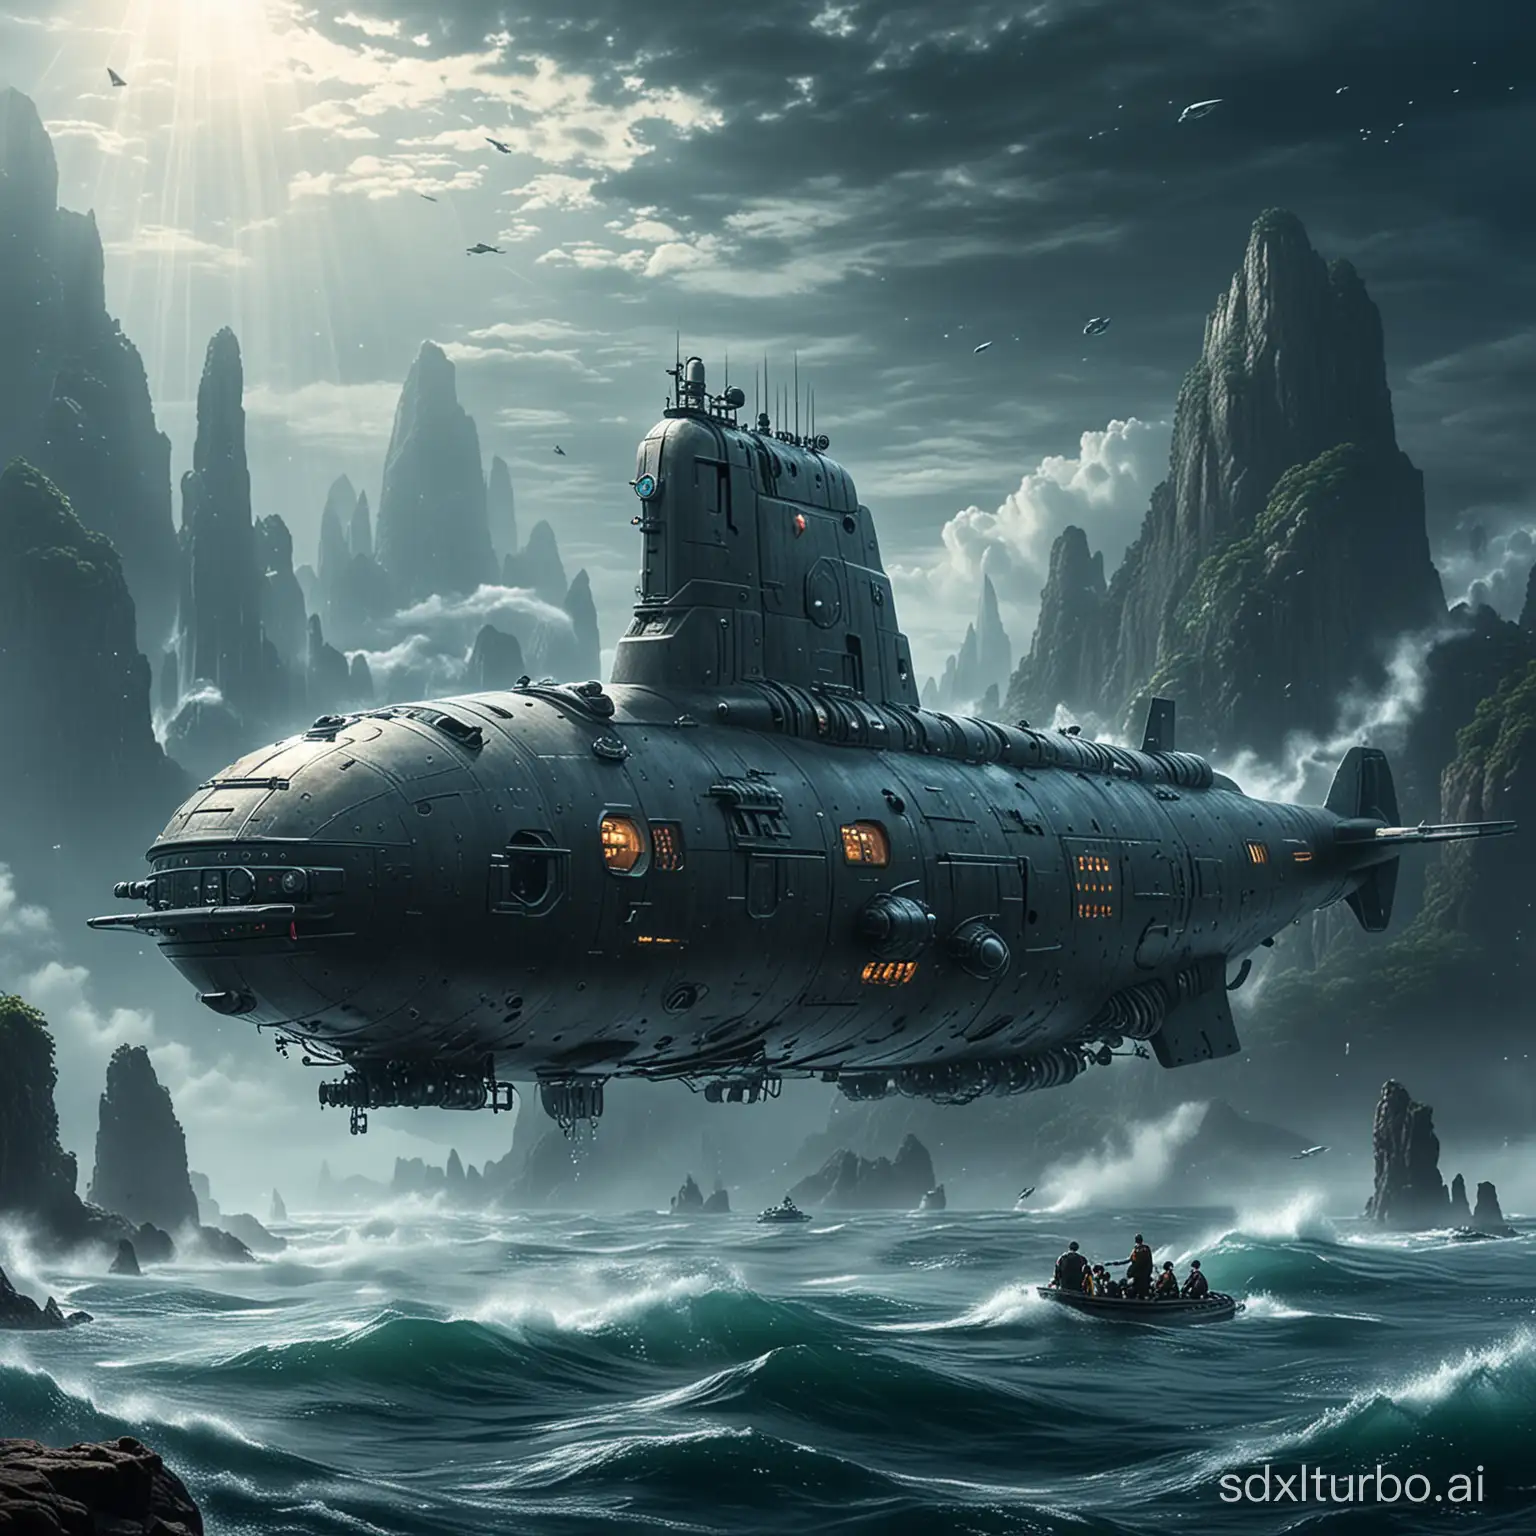 Exploring-the-Depths-Futuristic-Jiaolong-Submarine-in-a-SciFi-Scene